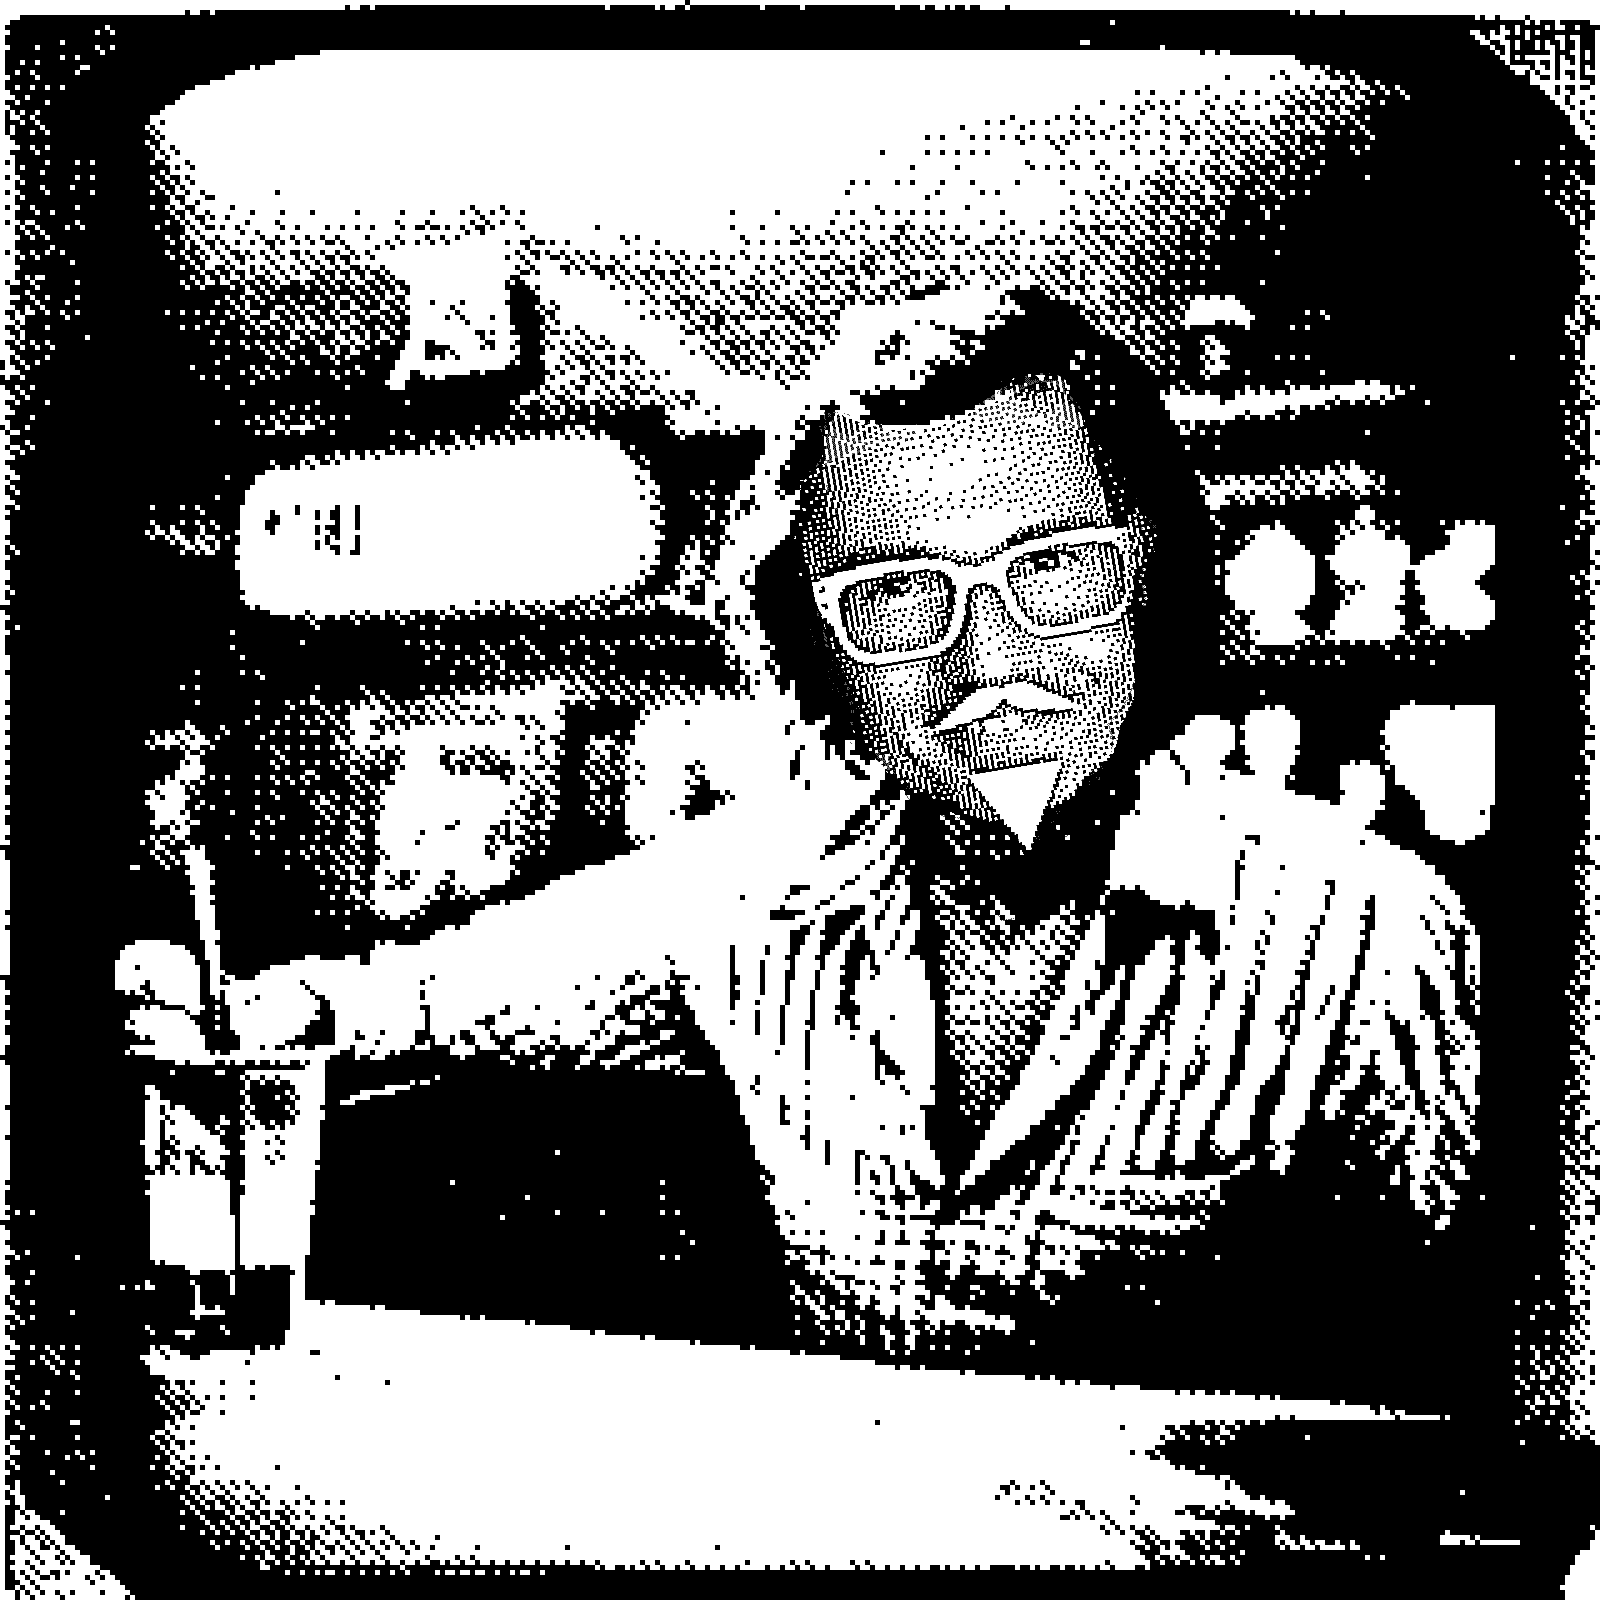 pixelated photo of retro 70s davidicus in a bar somewhere